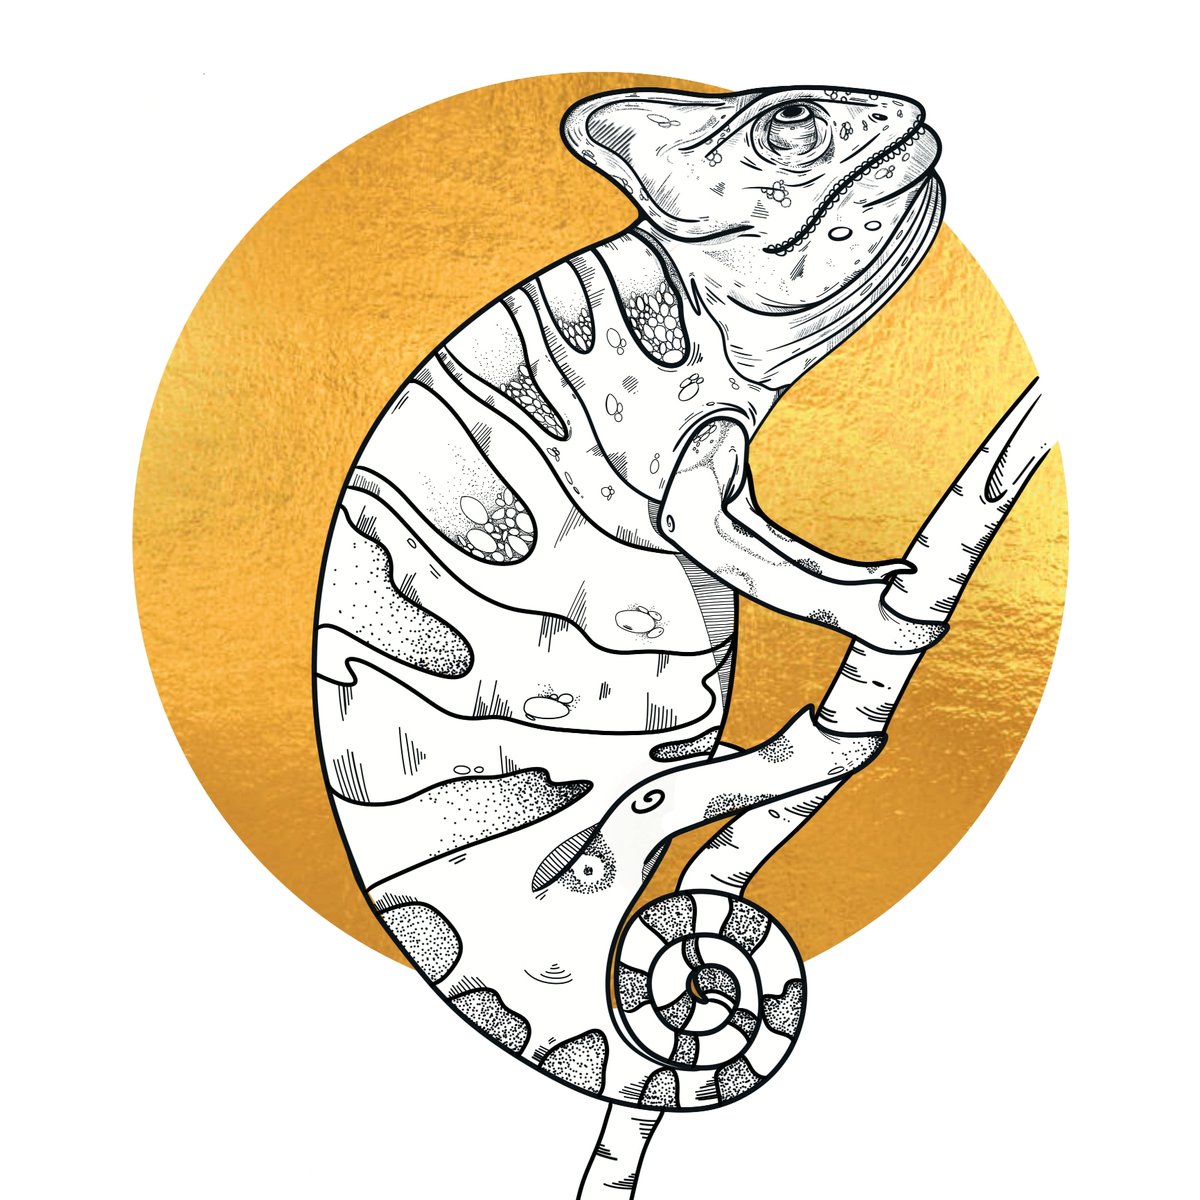 Golden chameleon ✨️🦎
#animaux #animals #pets #drawing #illustration #chameleon #dessinanimalier #animaldraw